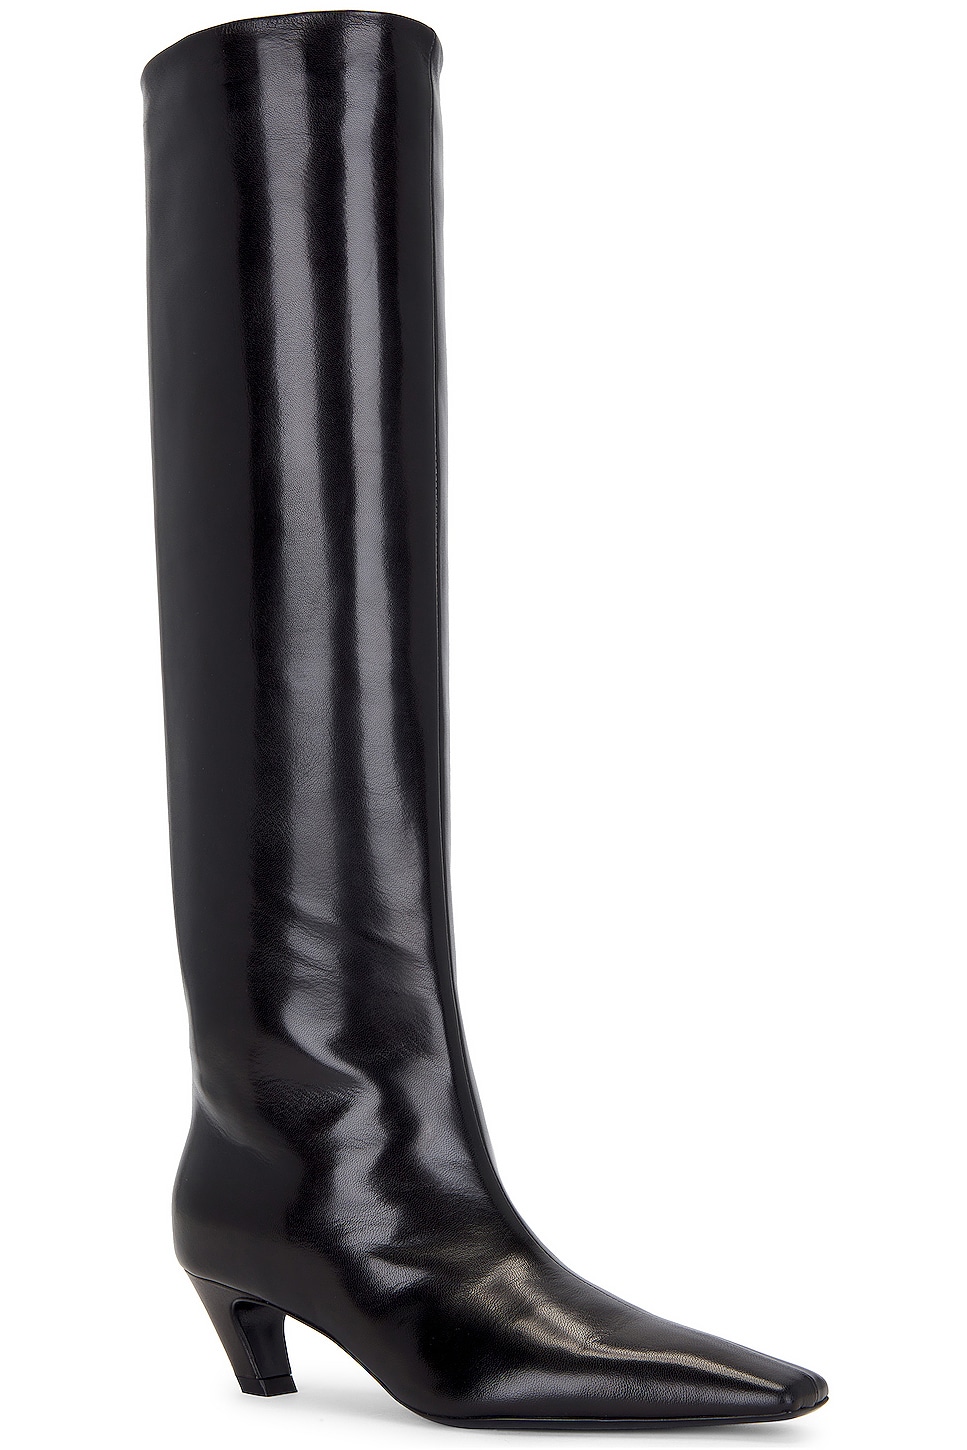 KHAITE Davis Knee High Boots in Black | FWRD